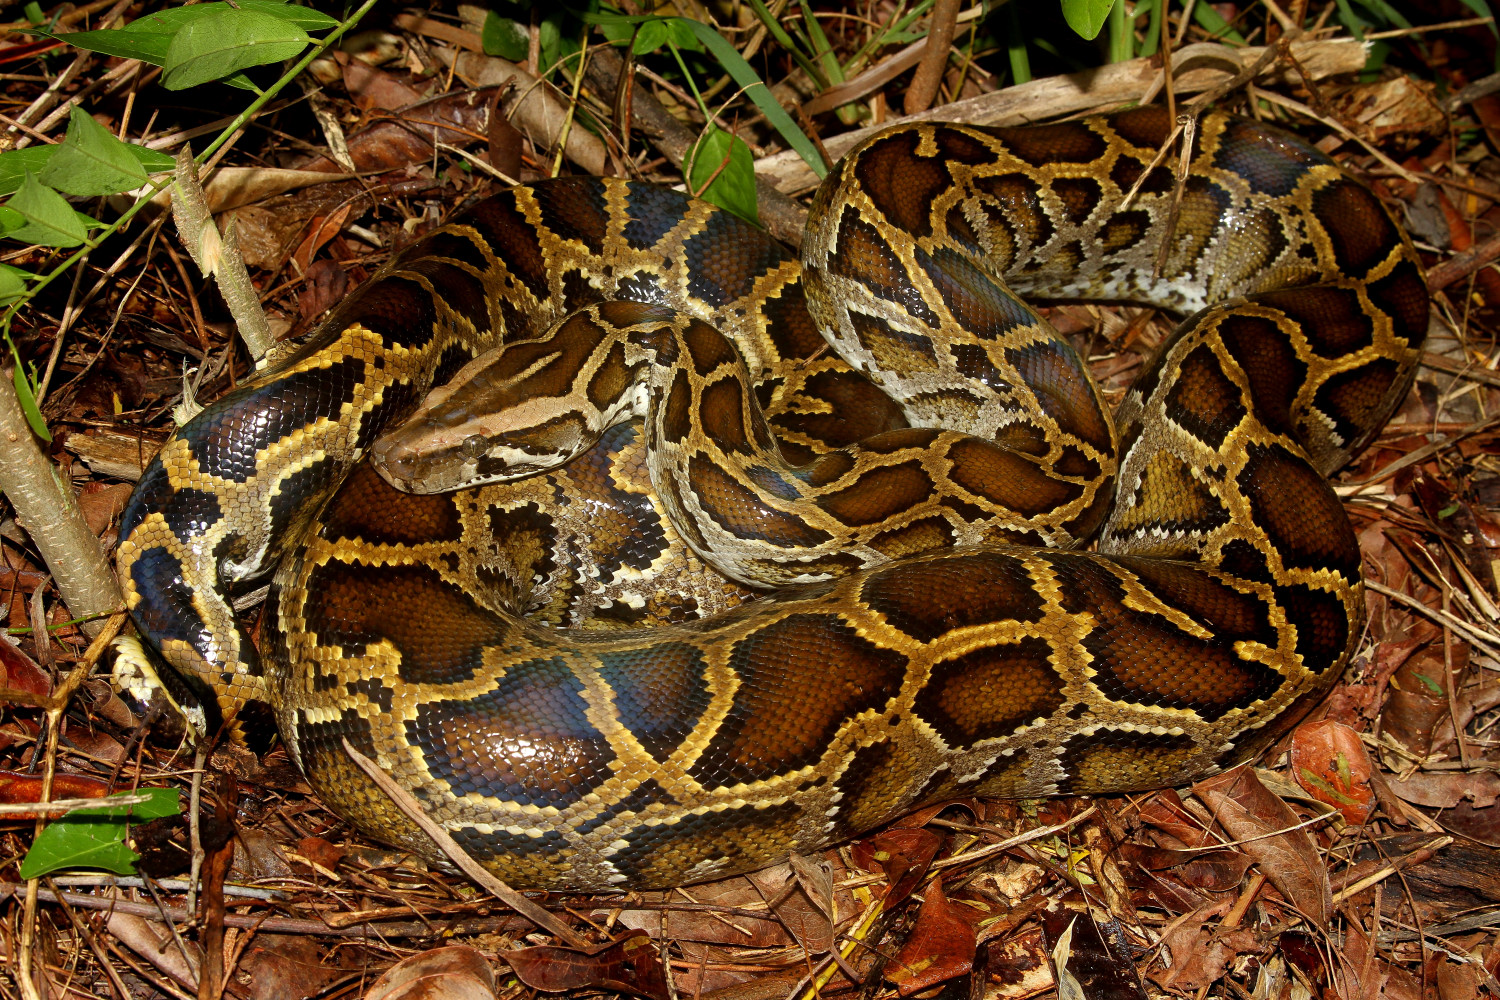 Similar Design South Florida Snakes Image Wallpaper